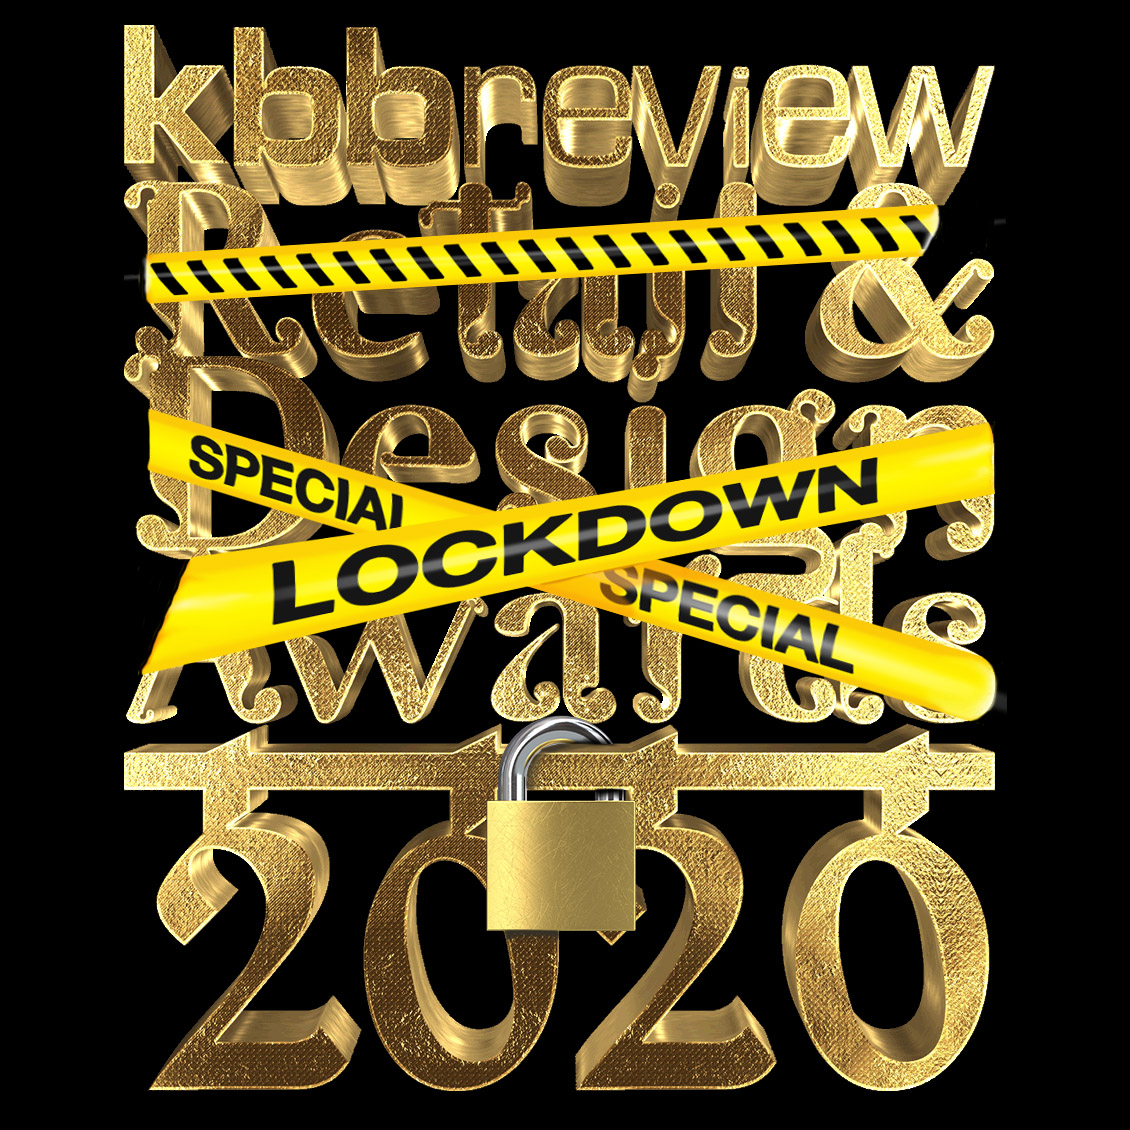 kbbreview unveils lockdown design competition